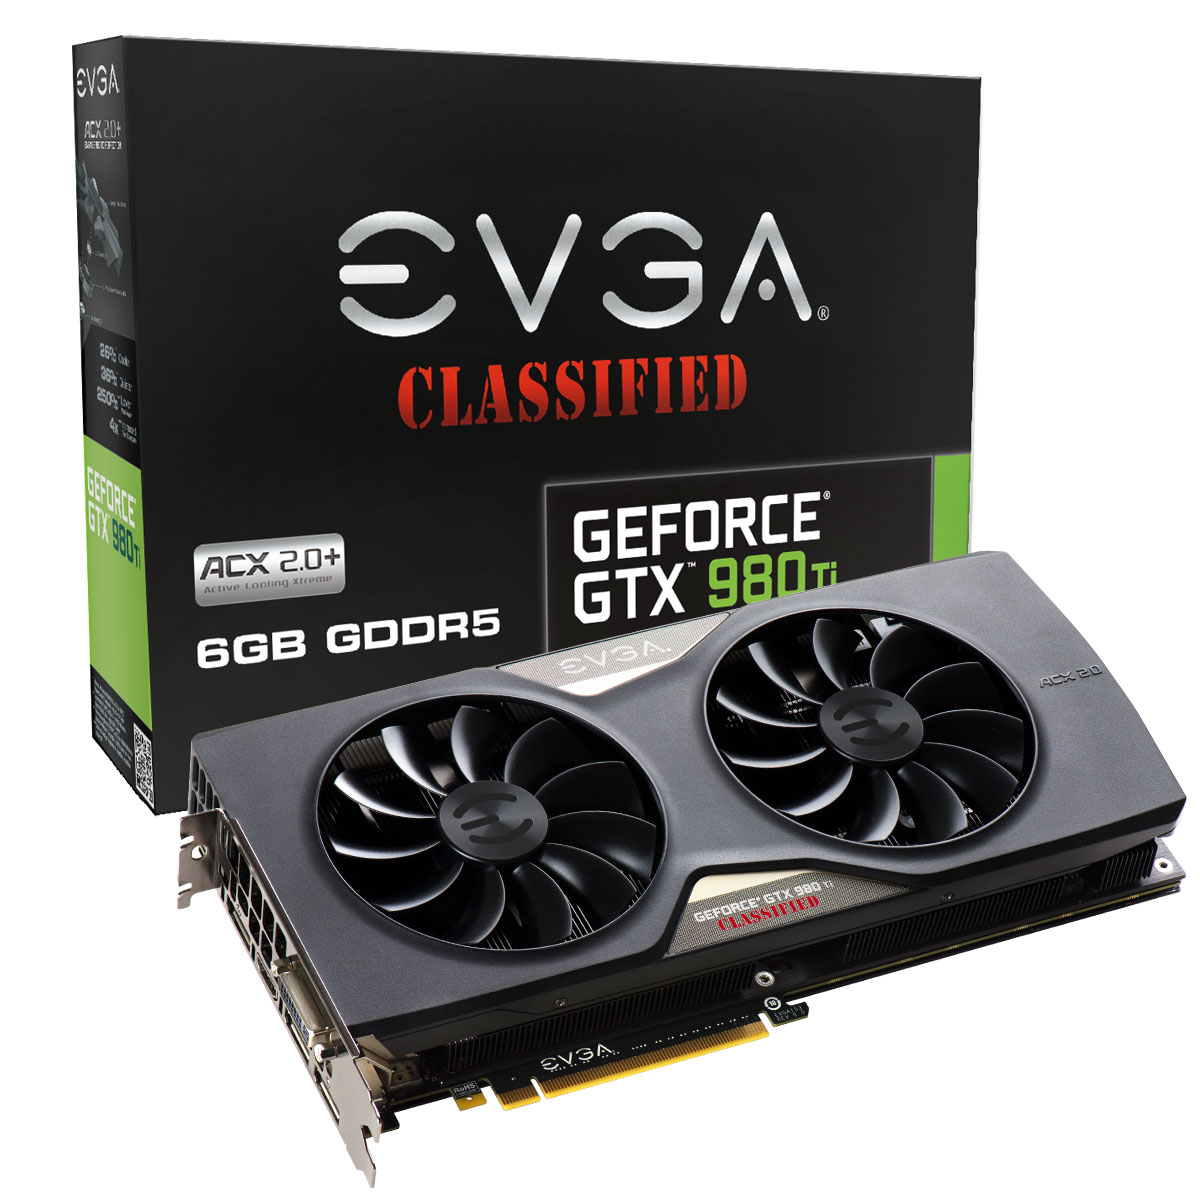 EVGA GeForce GTX 980 Ti Classified ACX 2.0+ announced 27